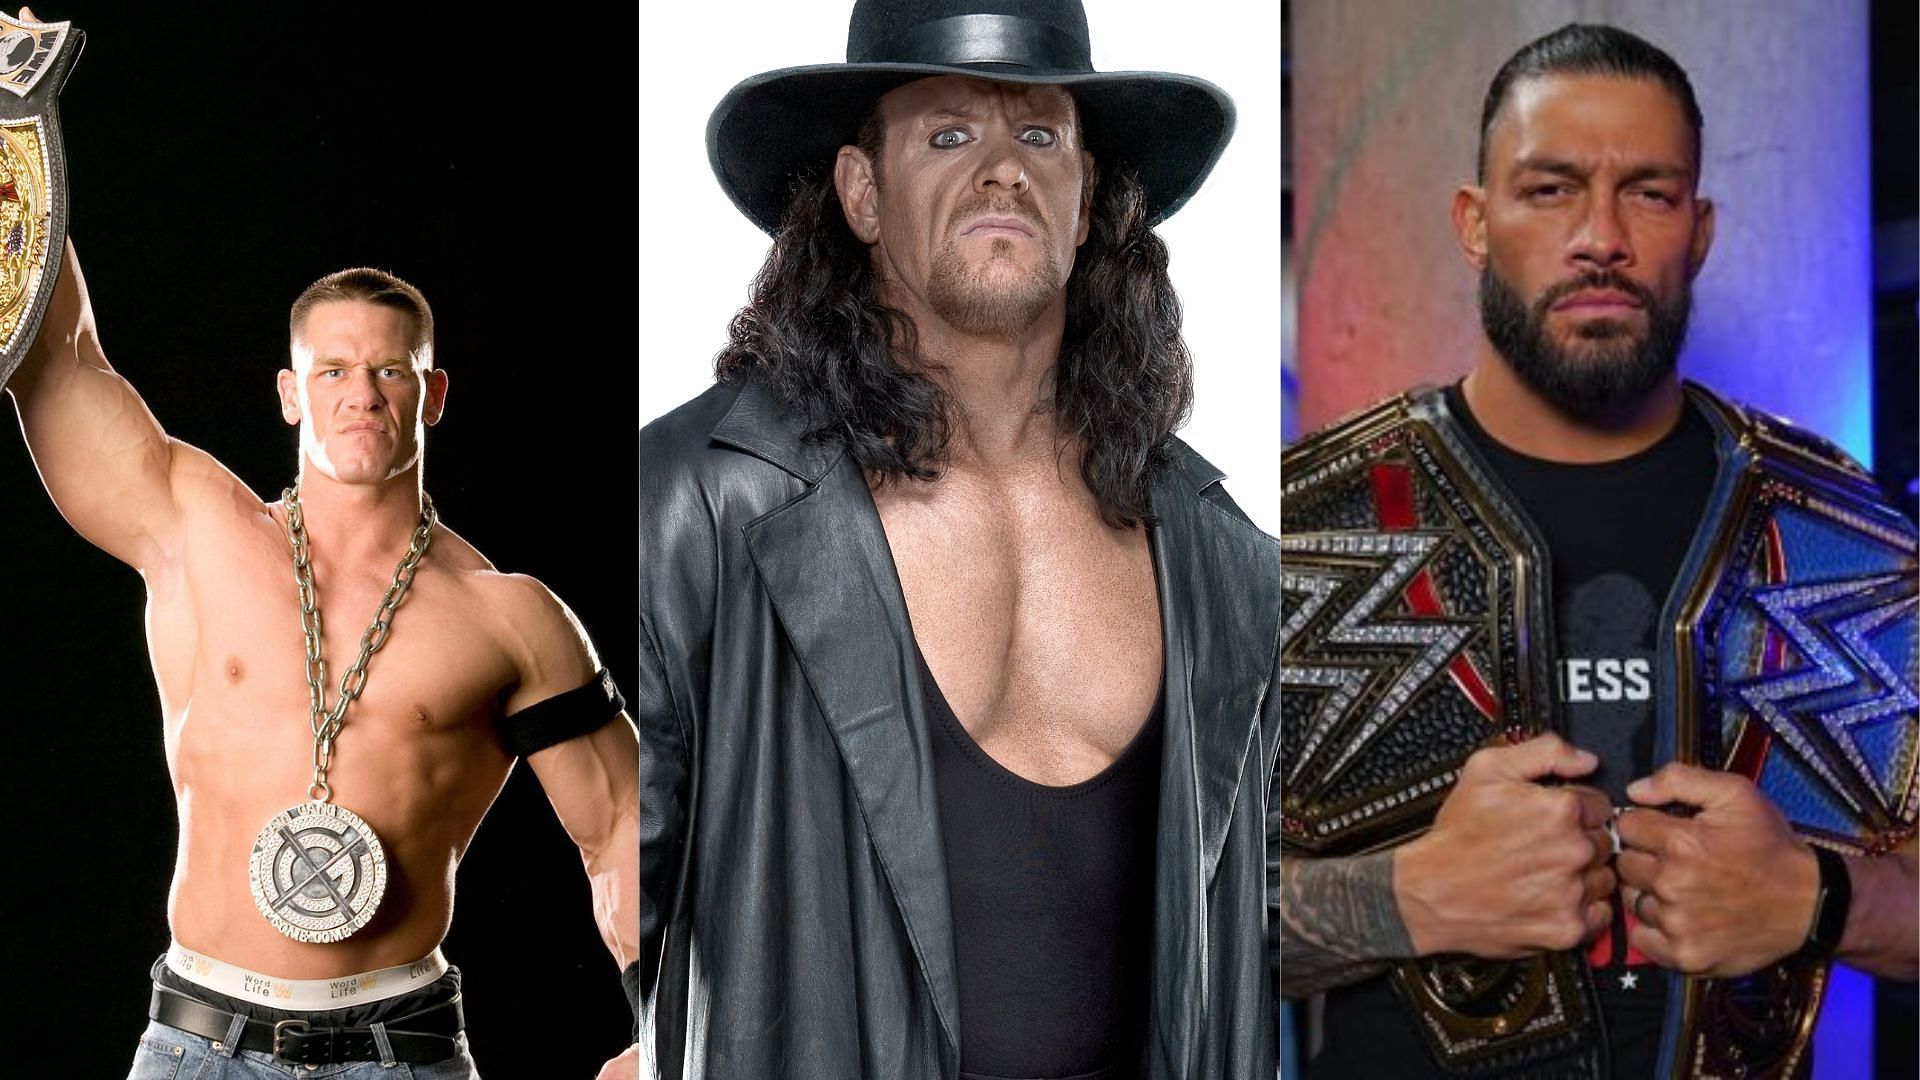 Roman Reigns vs Edge Should Be The WrestleMania 37 Match